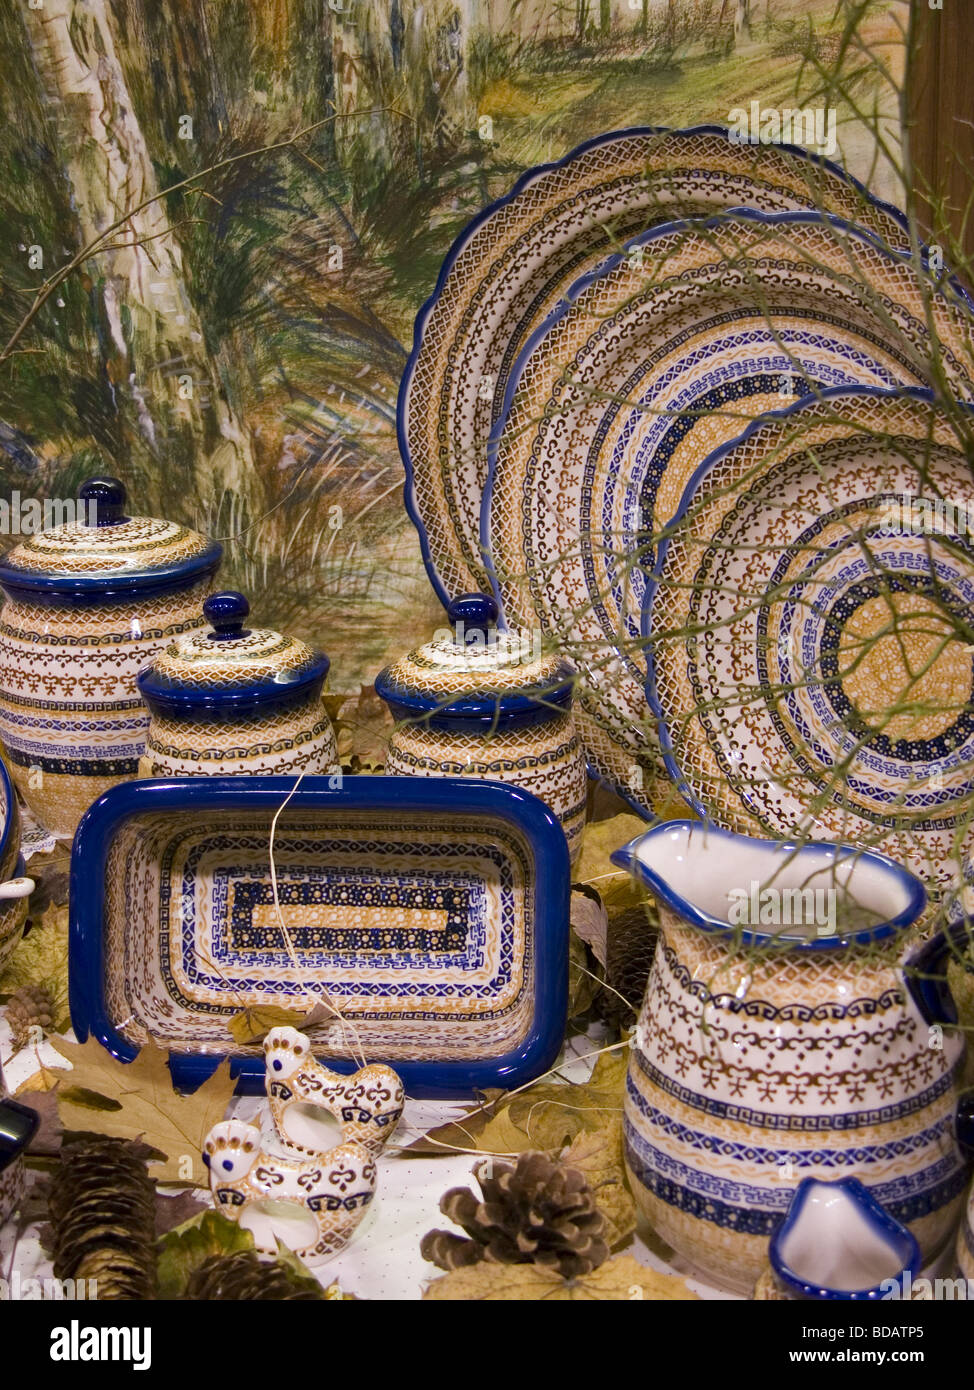 Pottery from Bolesławiec,Pottery, Bolesławiec, dishes, tableware, plates, pottery from Boleslawiec, Poland, manufacture, jug, di Stock Photo